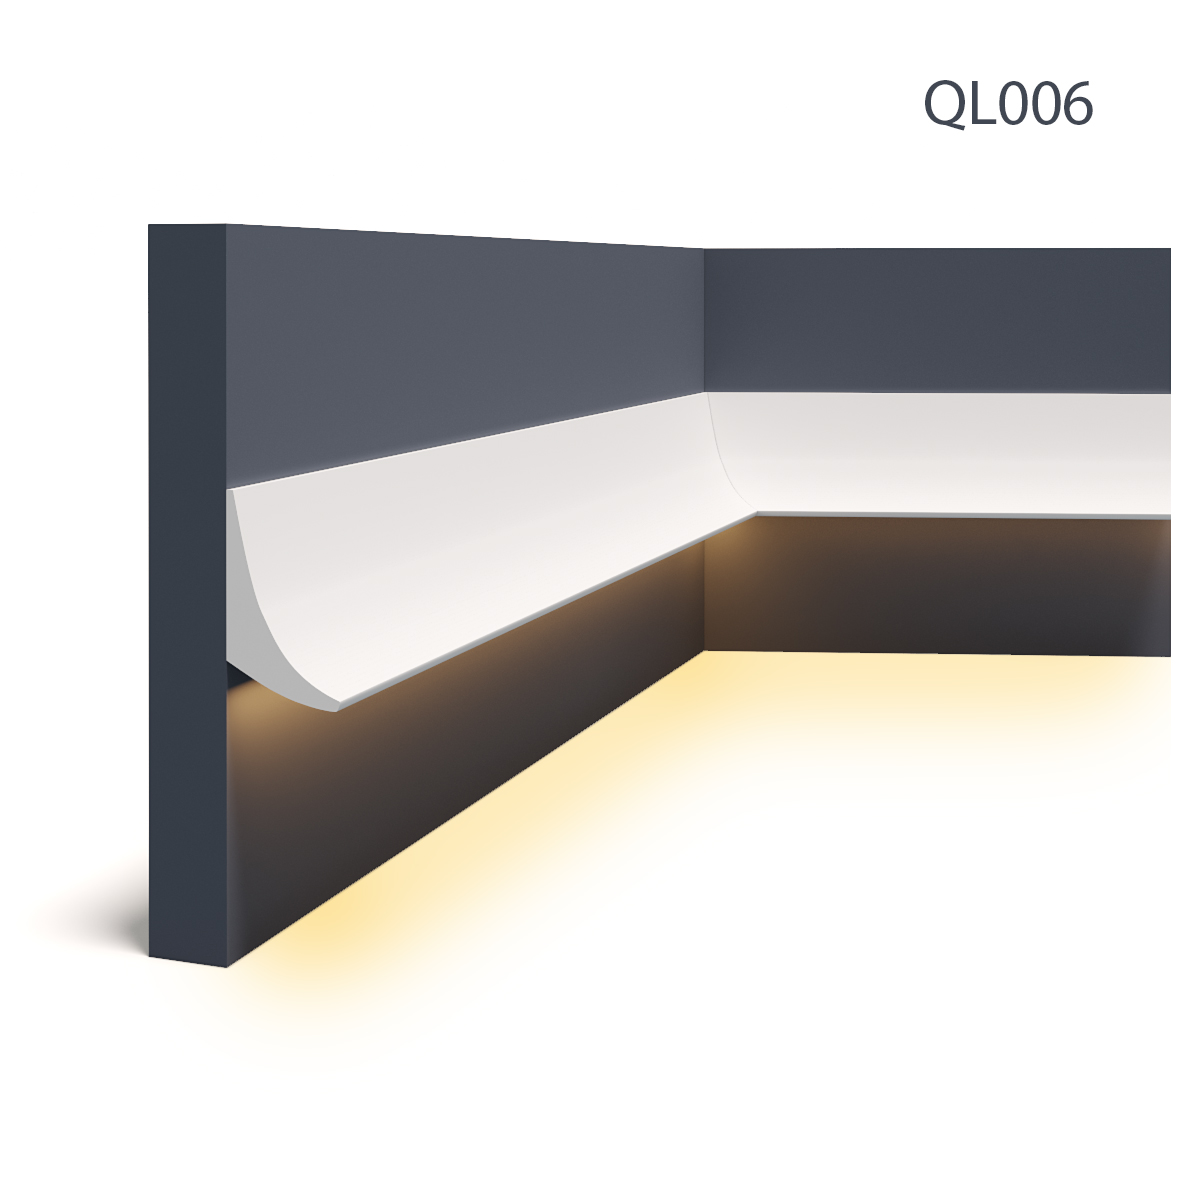 Brau decorativ pentru LED QL006, 200 X 7 X 4.2 cm, Mardom Decor, Brauri decorative 